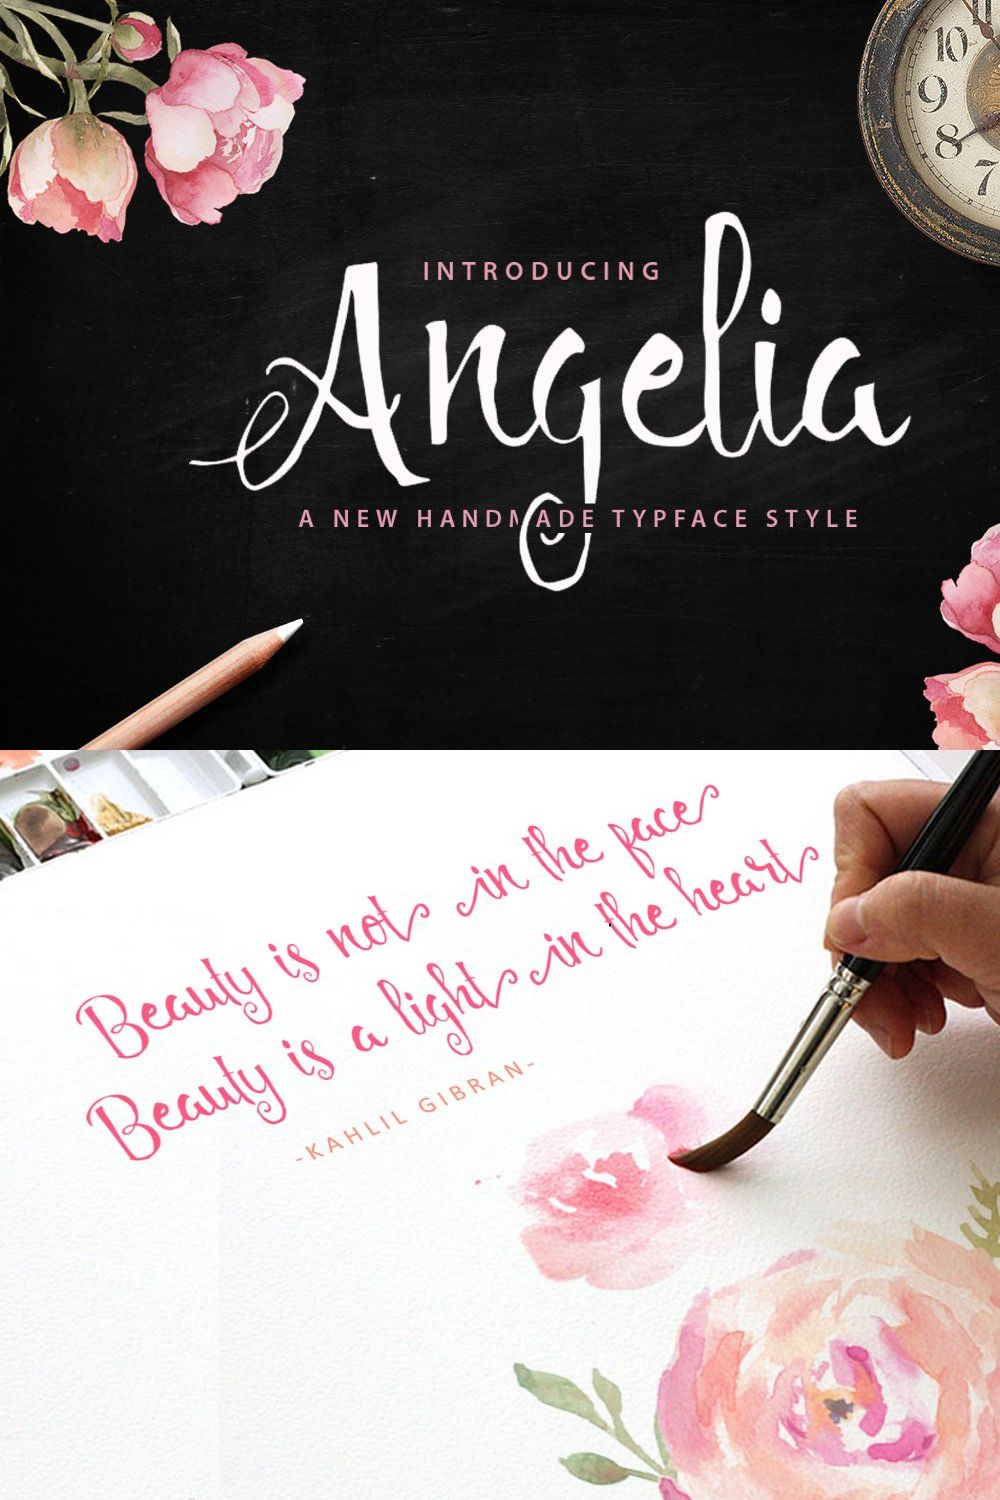 Angelia Script (50% off) pinterest preview image.